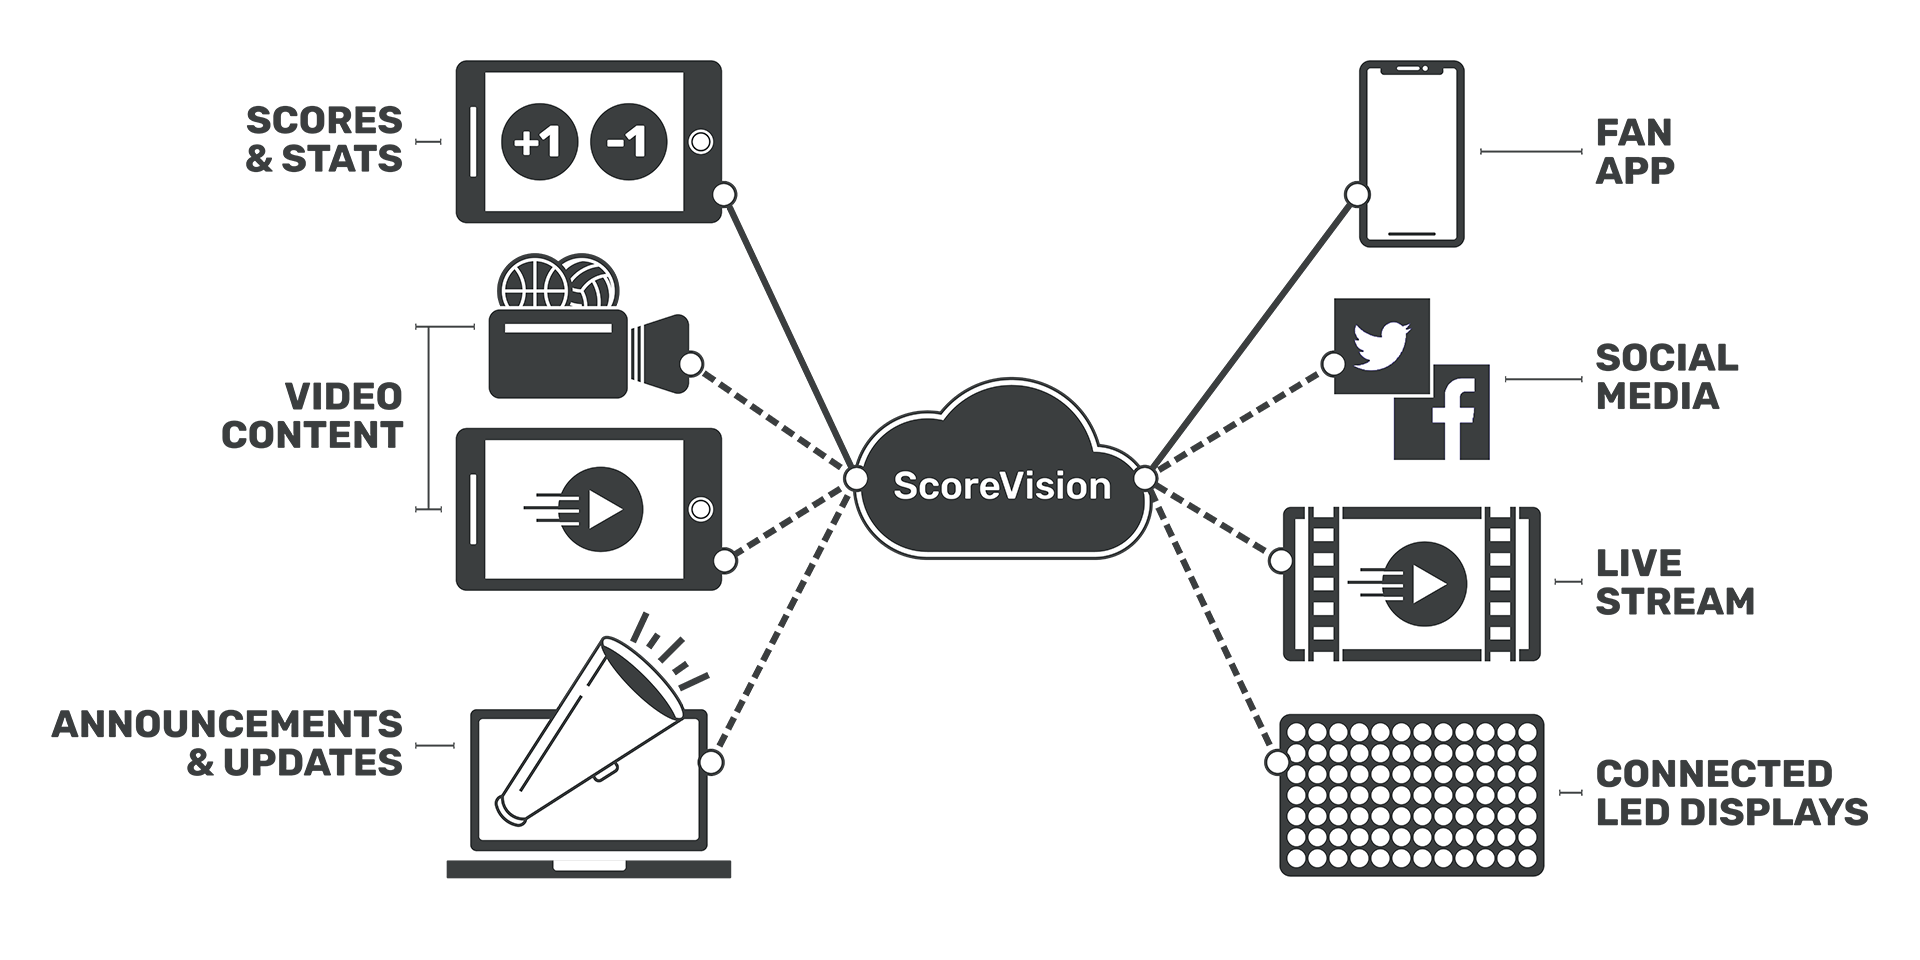 ScoreVision Full System Diagram